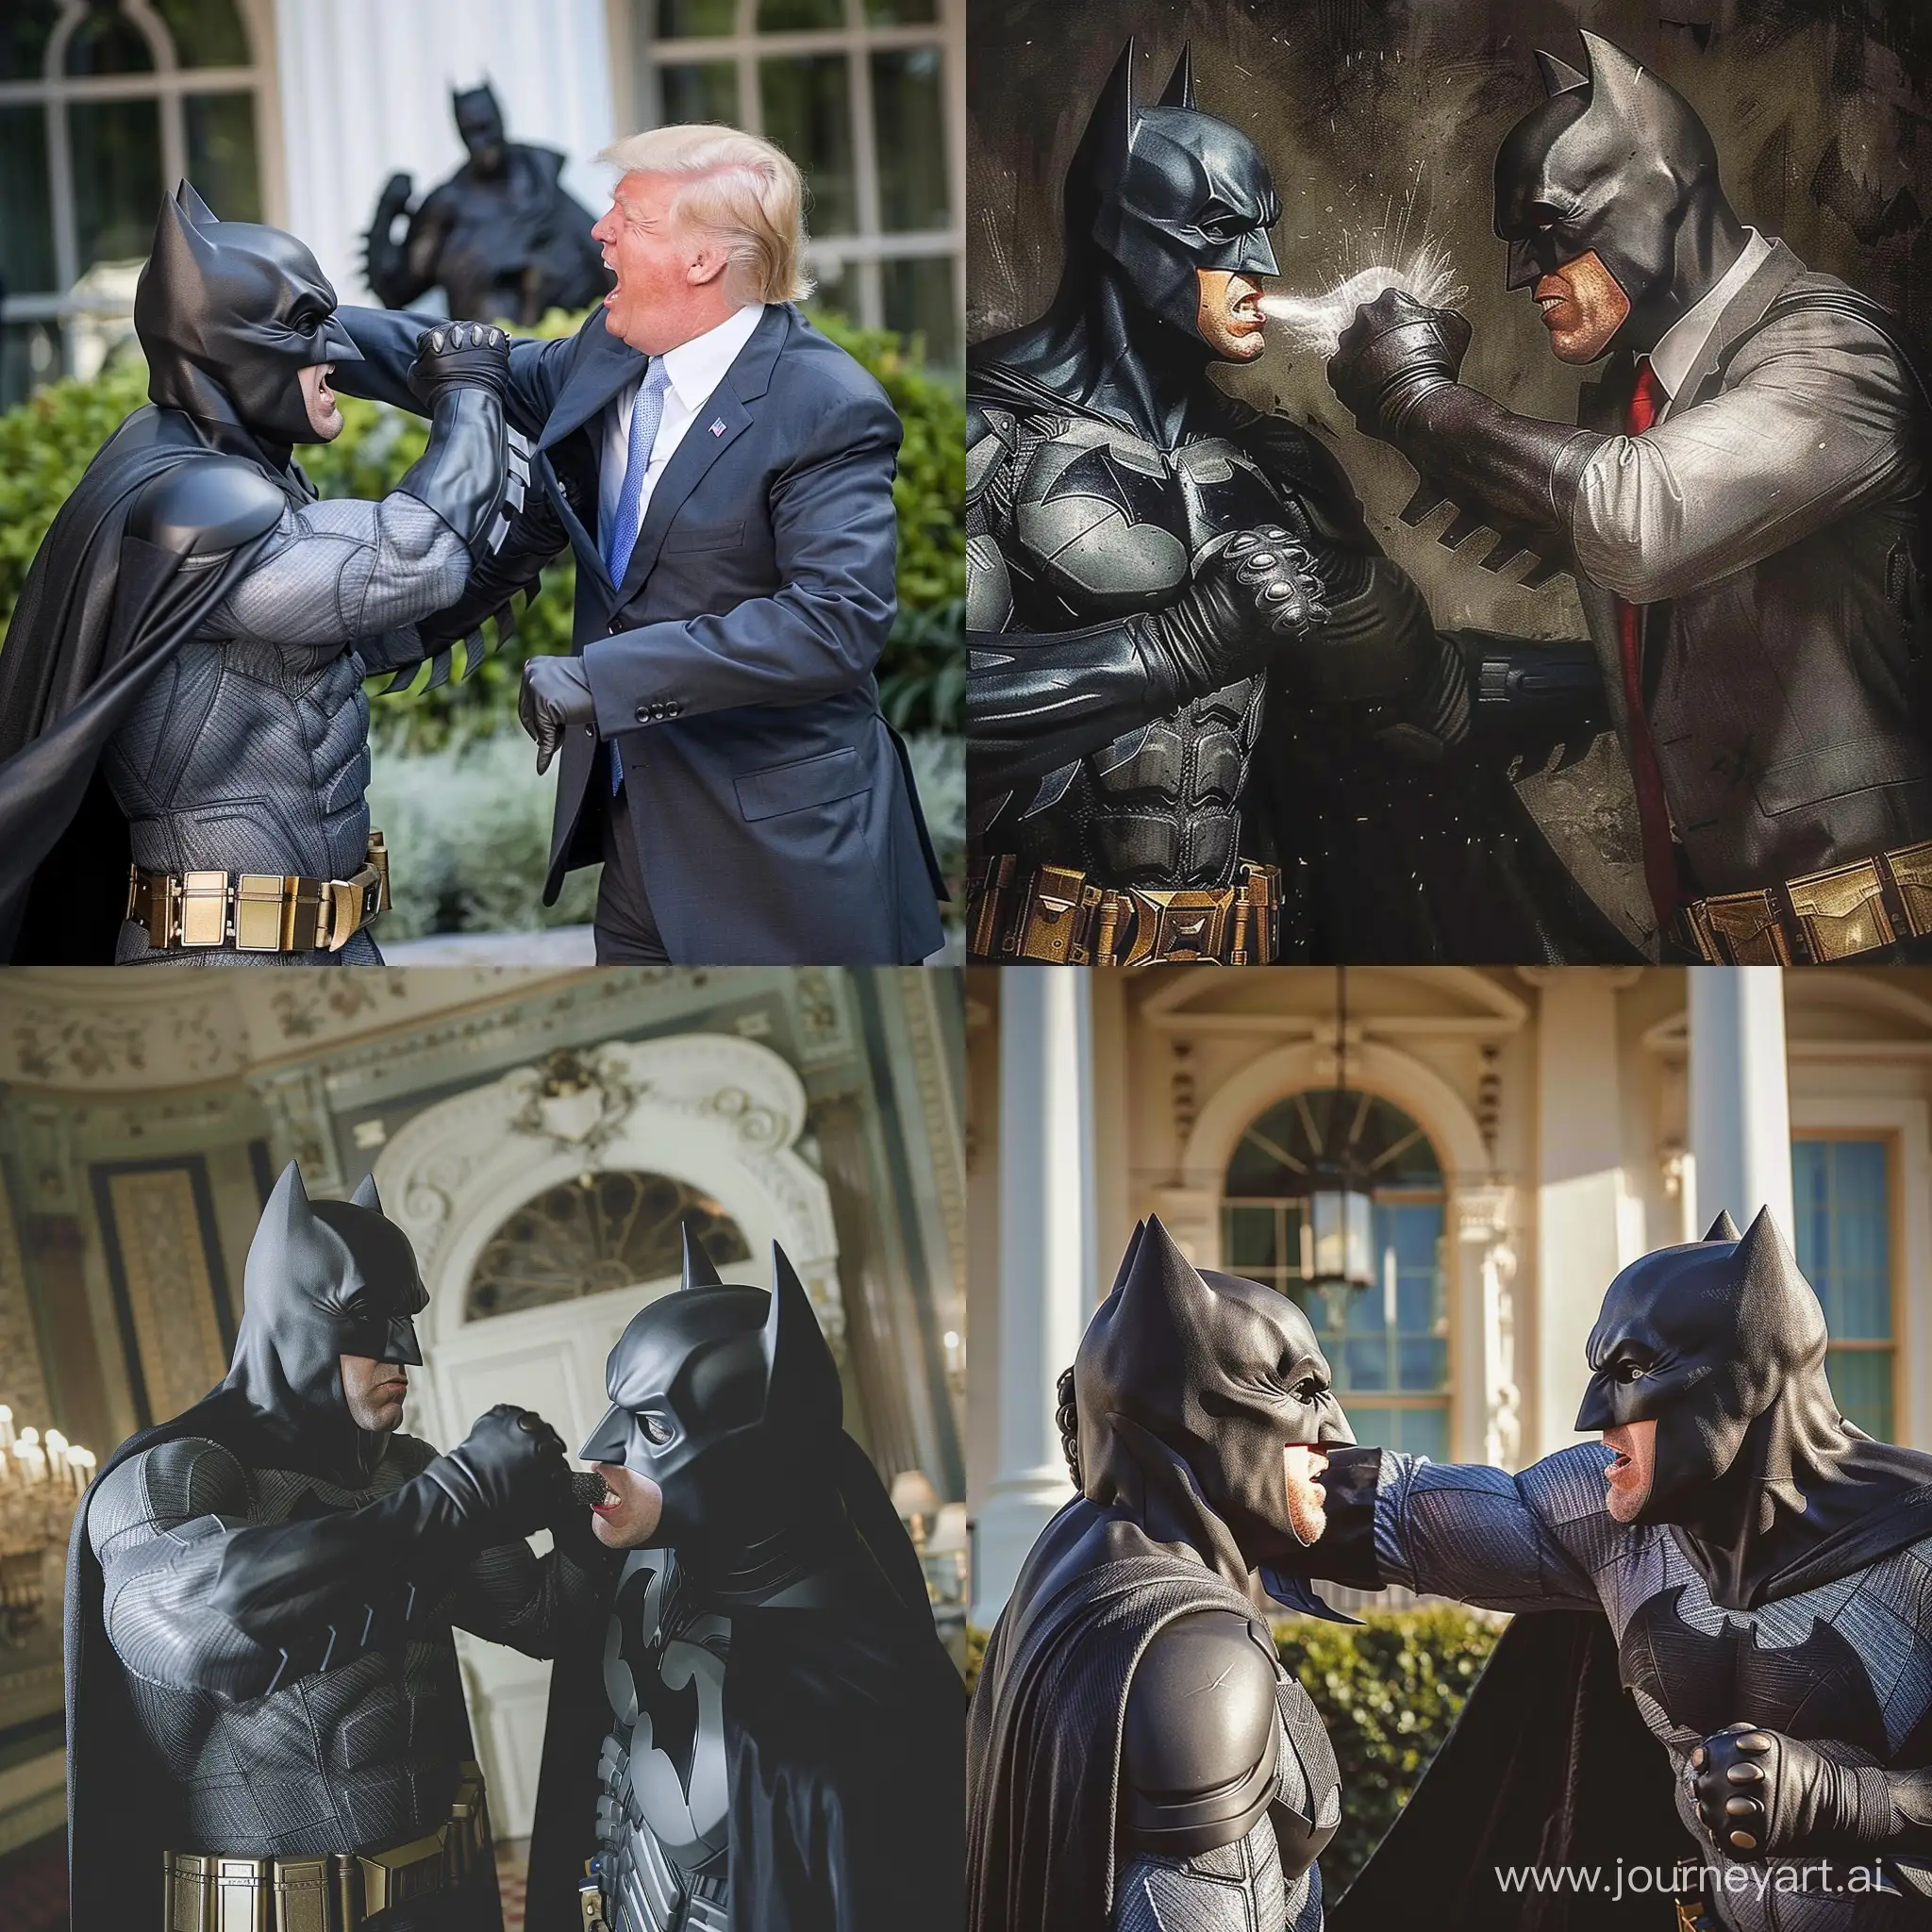 Batman punch American president 